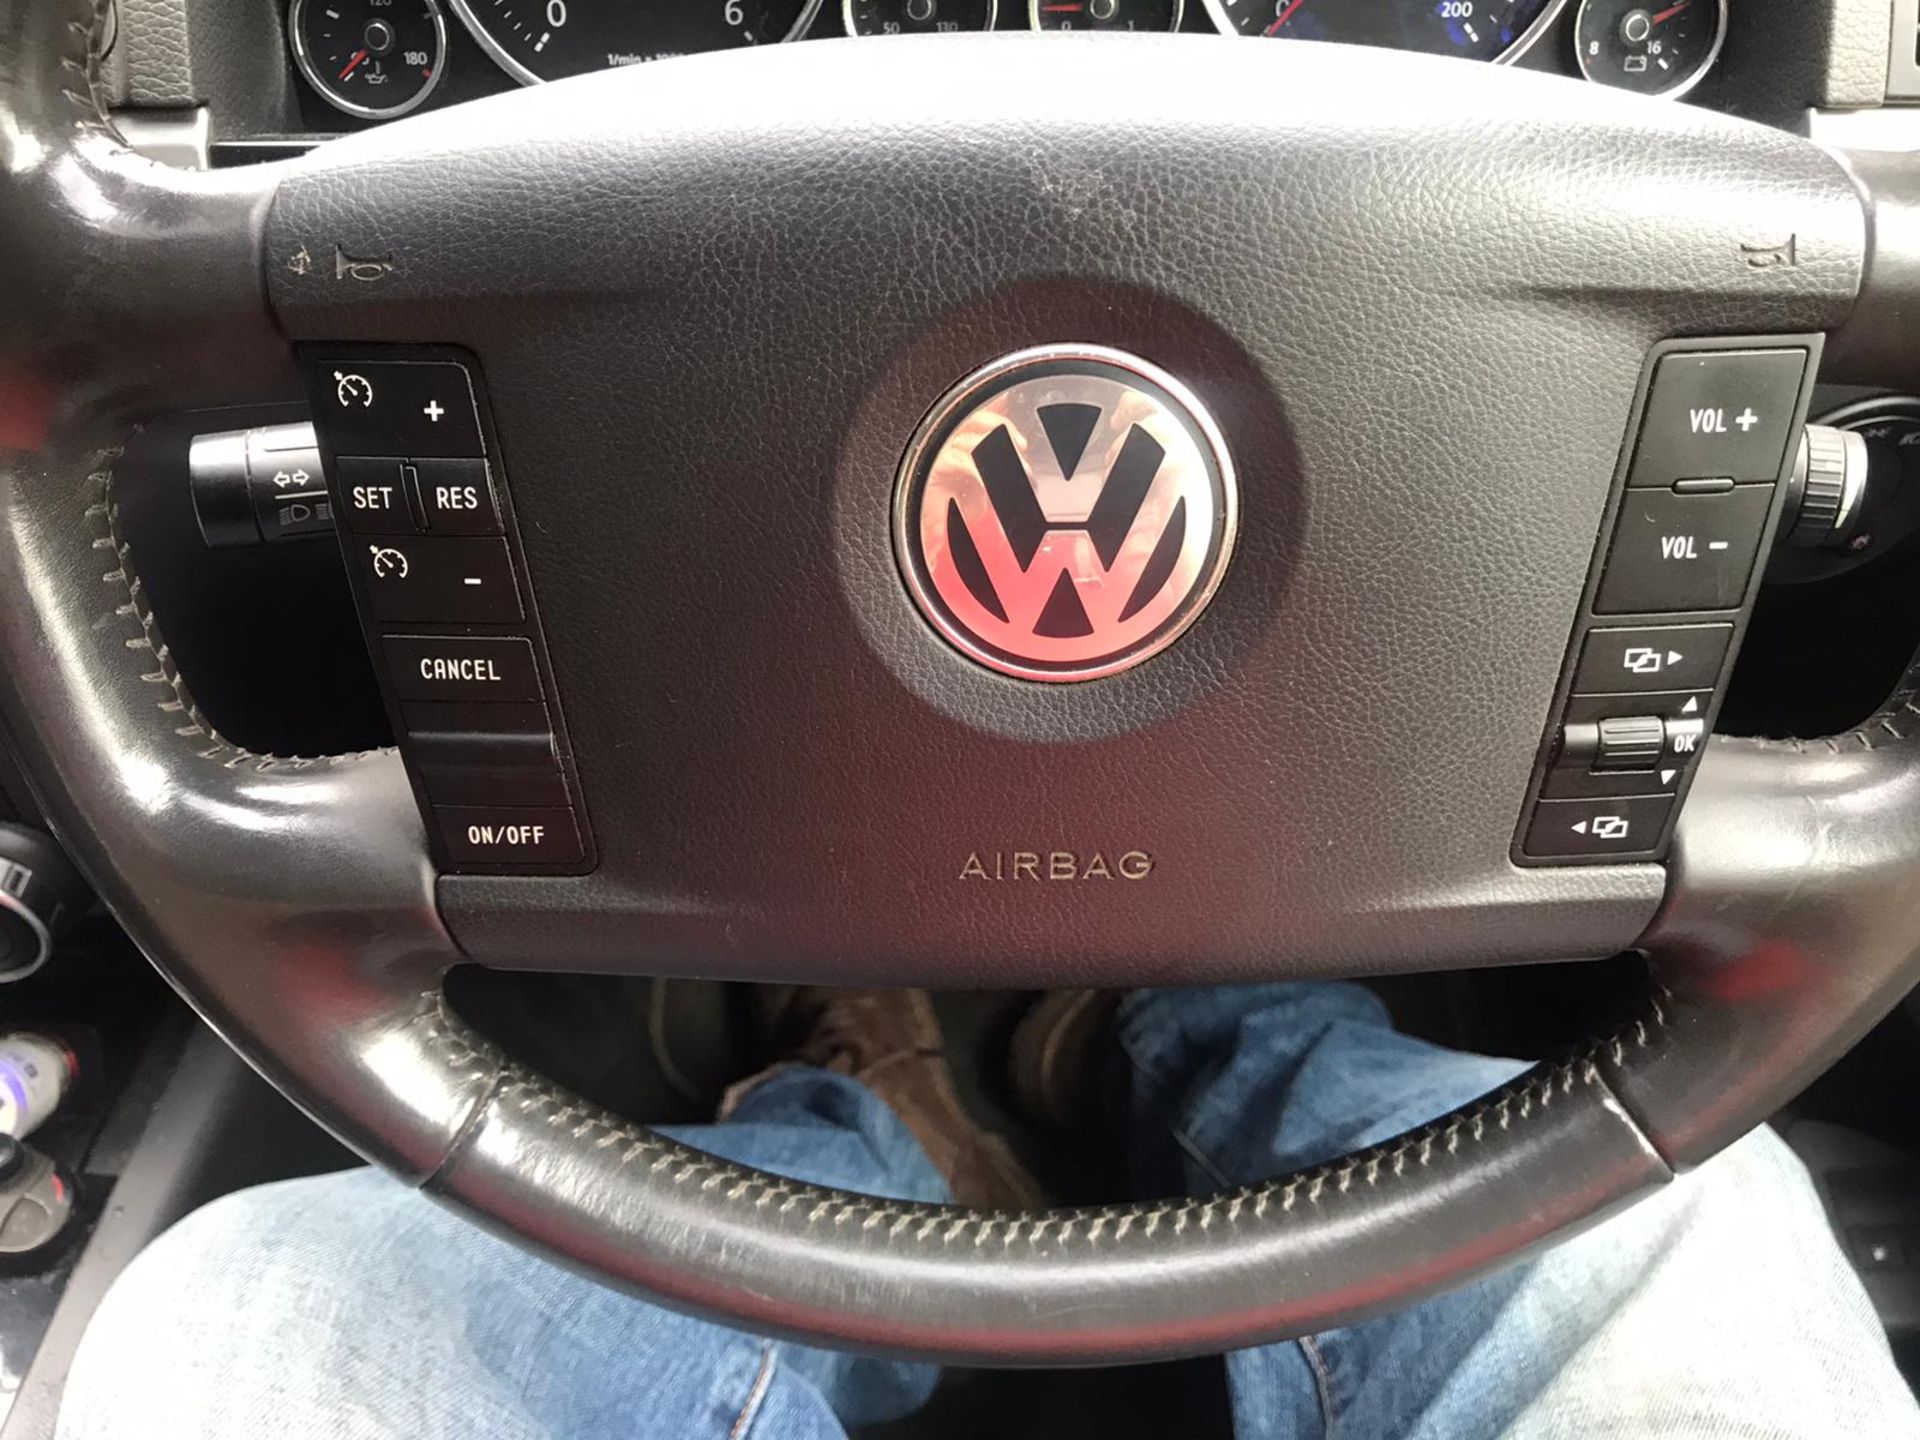 (RESERVE MET) Volkswagen Touareg Altitude 2.5 TDI Auto - 2010 Model - 1 Former Keeper - Sat Nav - - Image 13 of 29